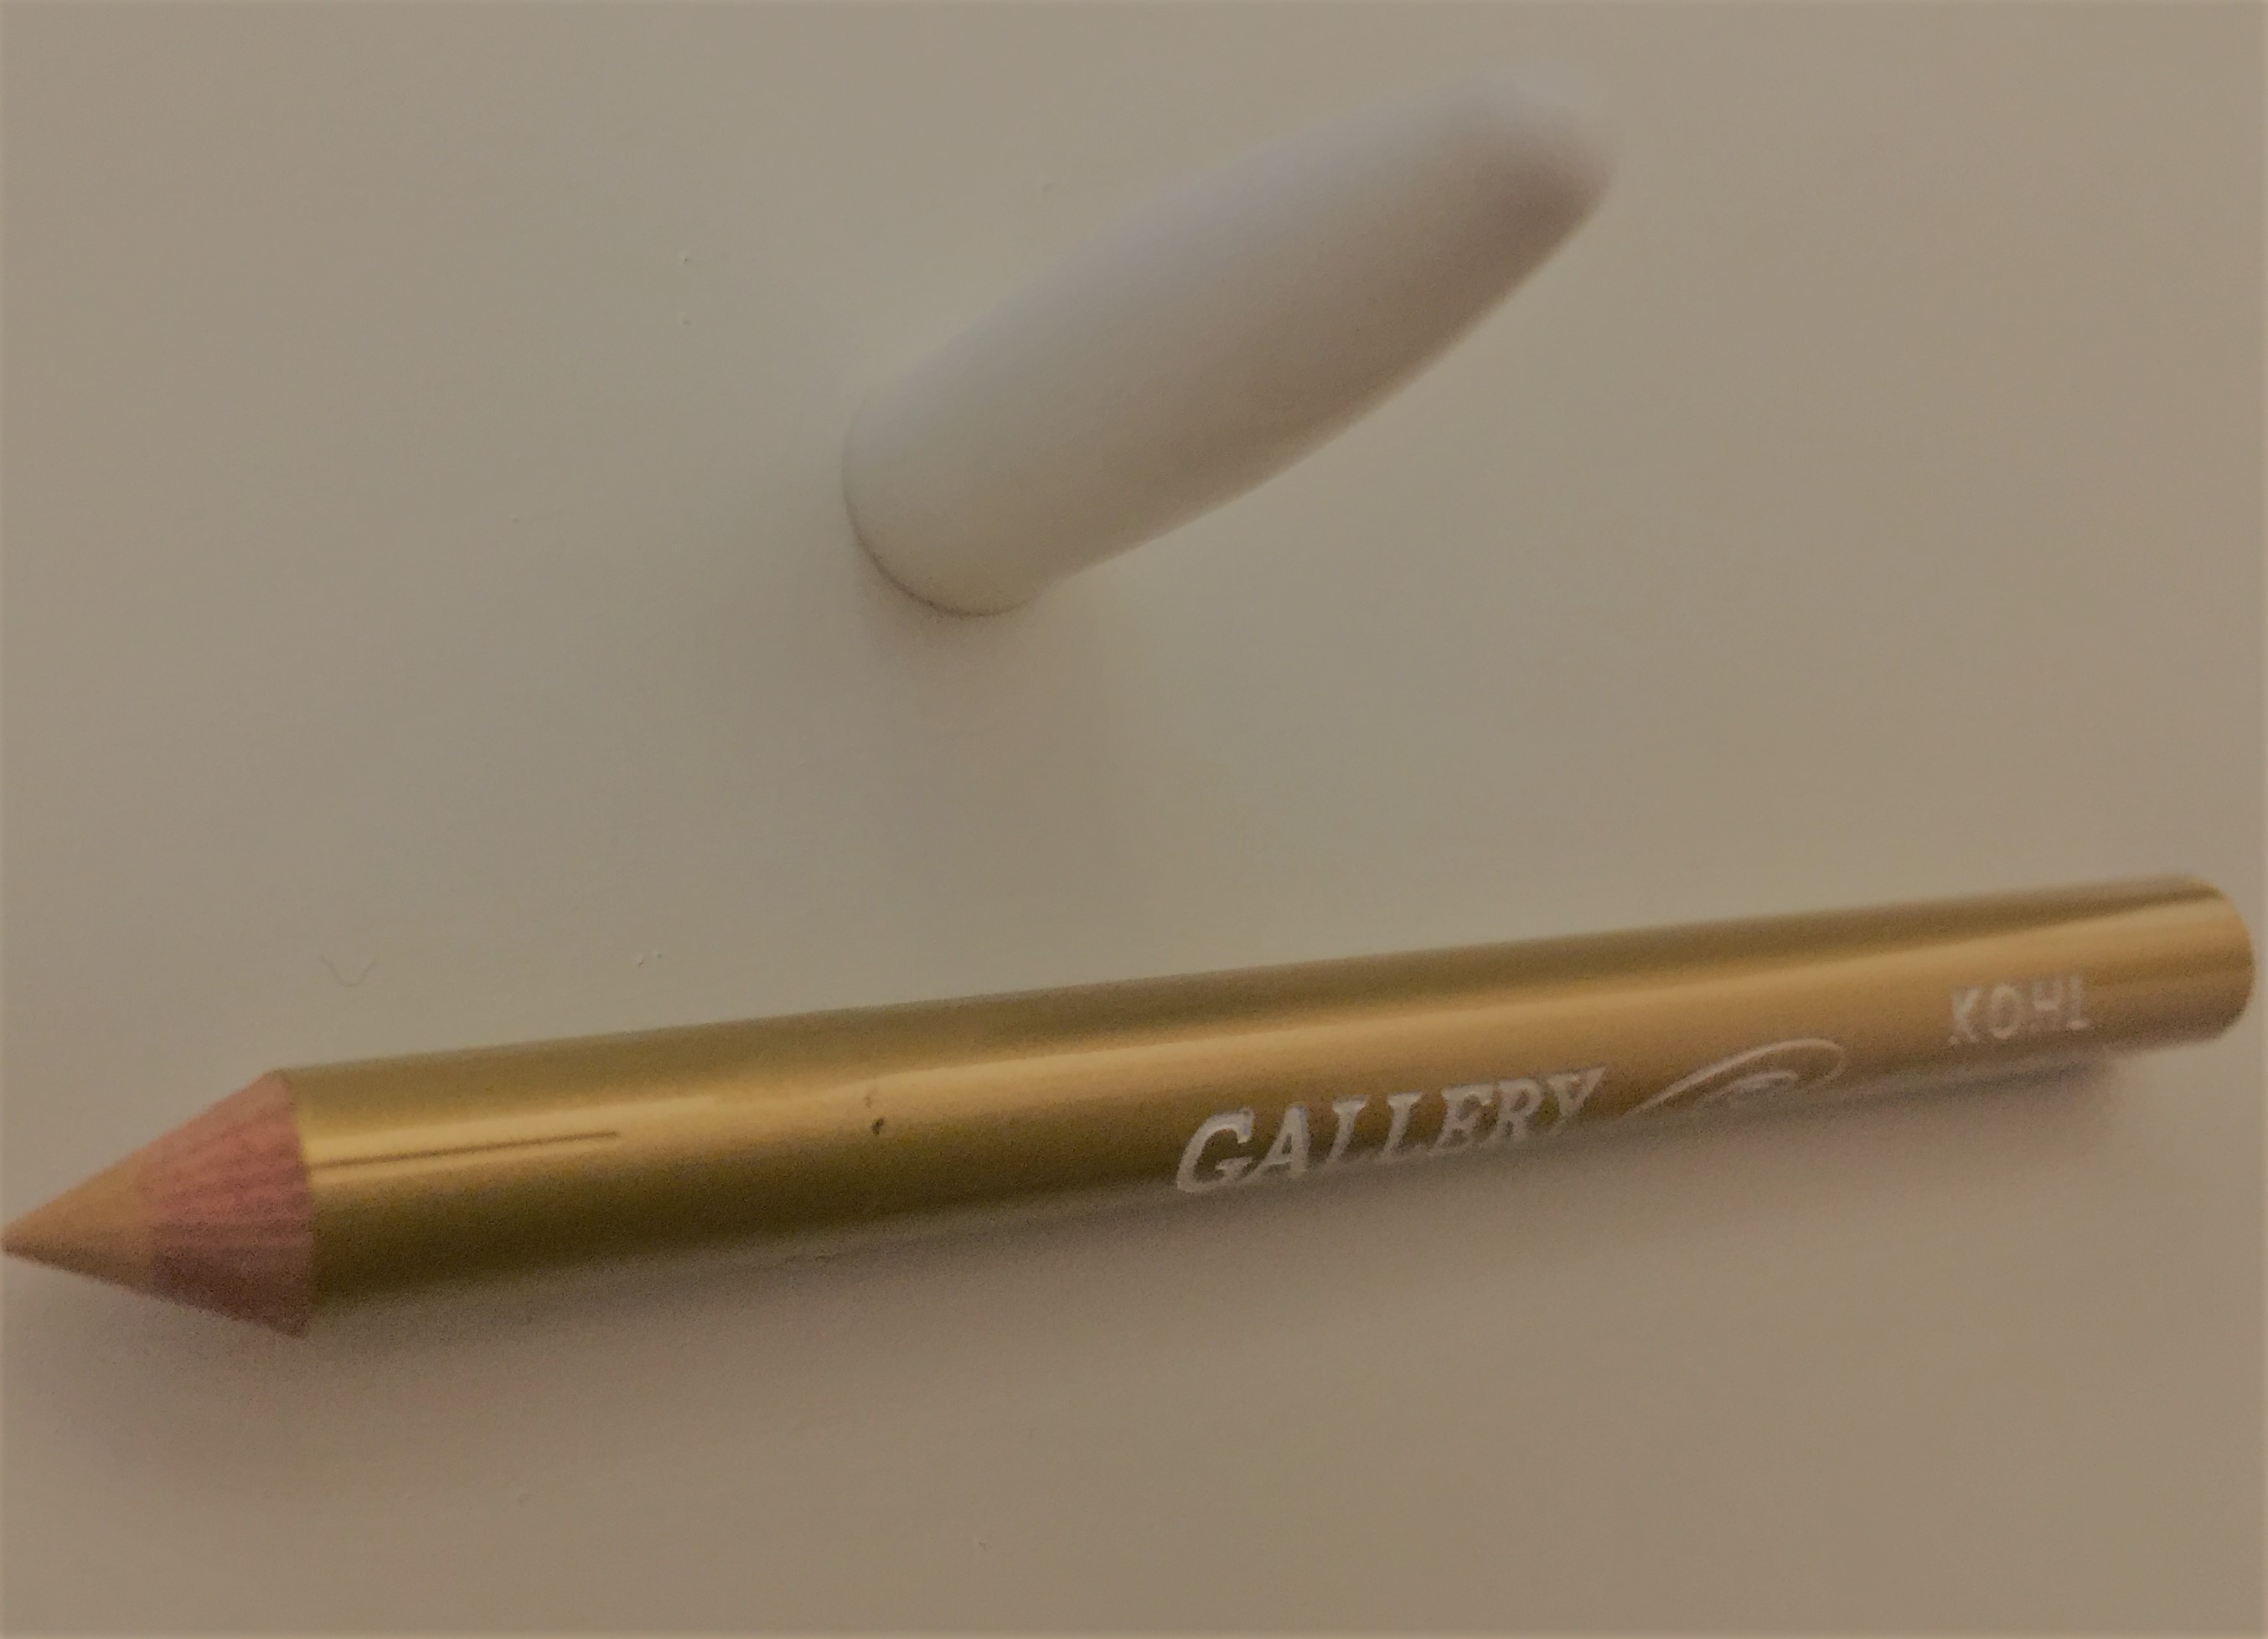 Gallery Cosmetics Soft Kohl Eyeliner - Gold Shimmer